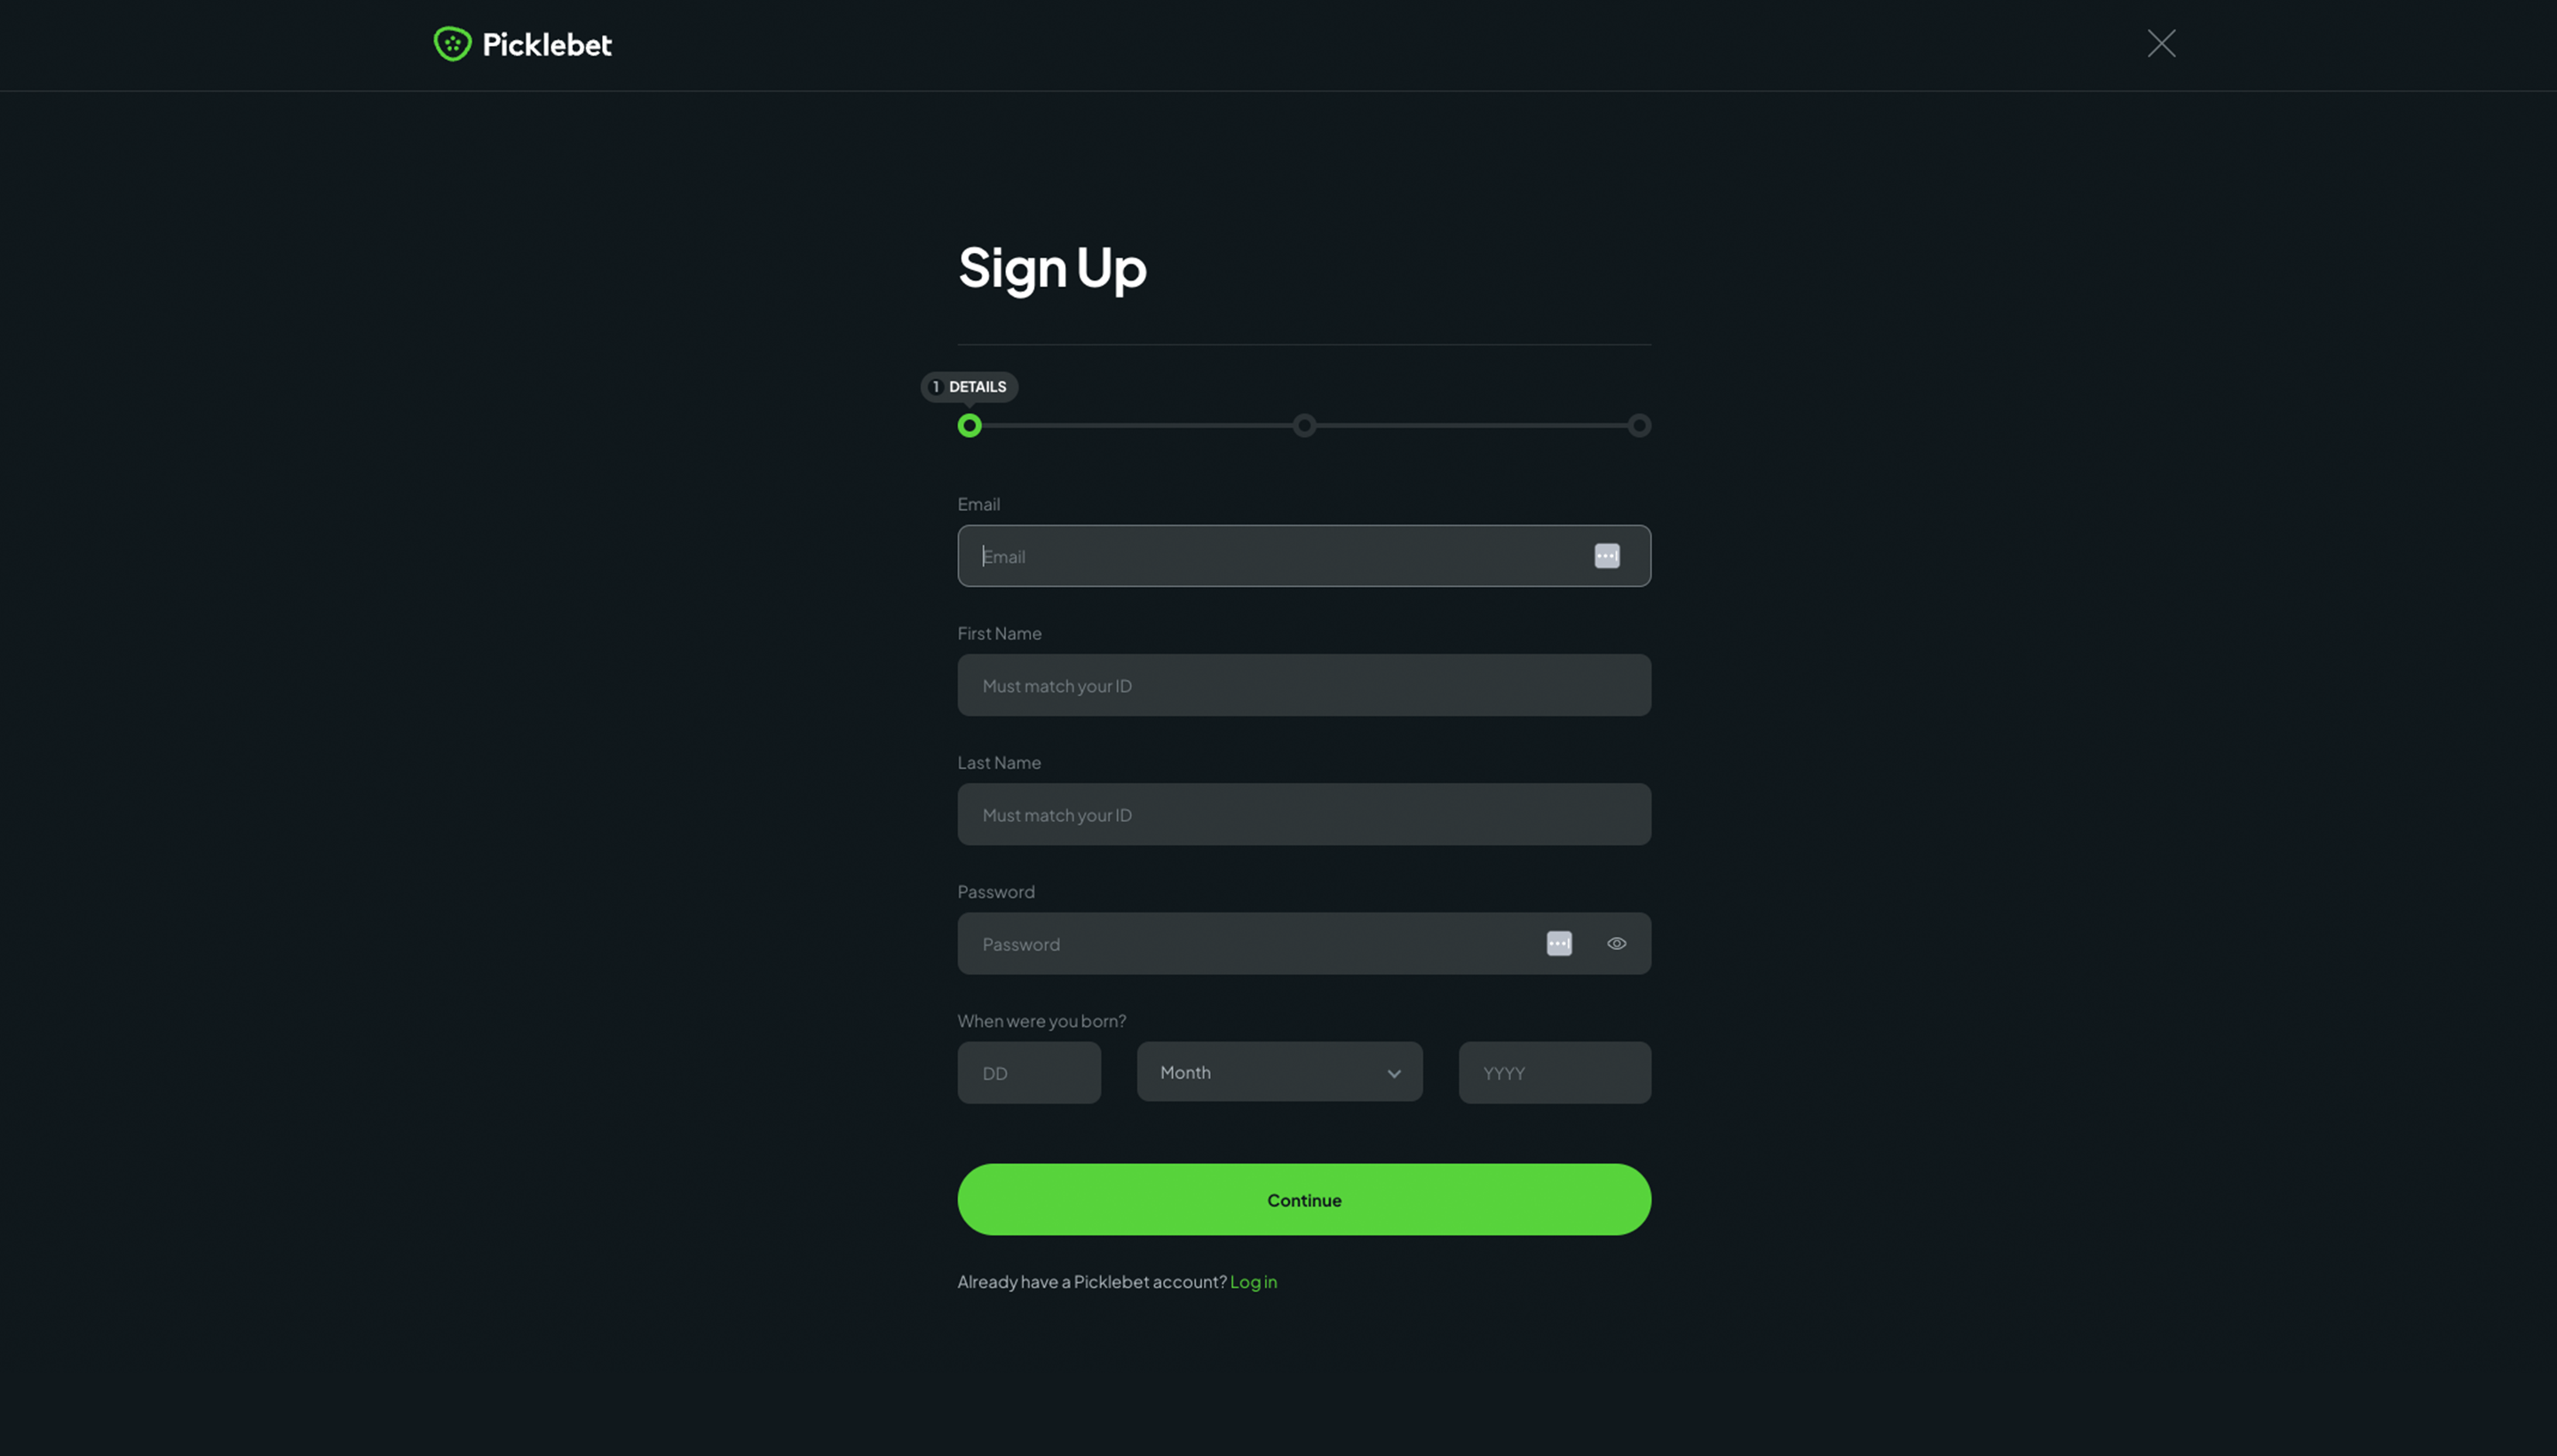 Picklebet sign up page screenshot